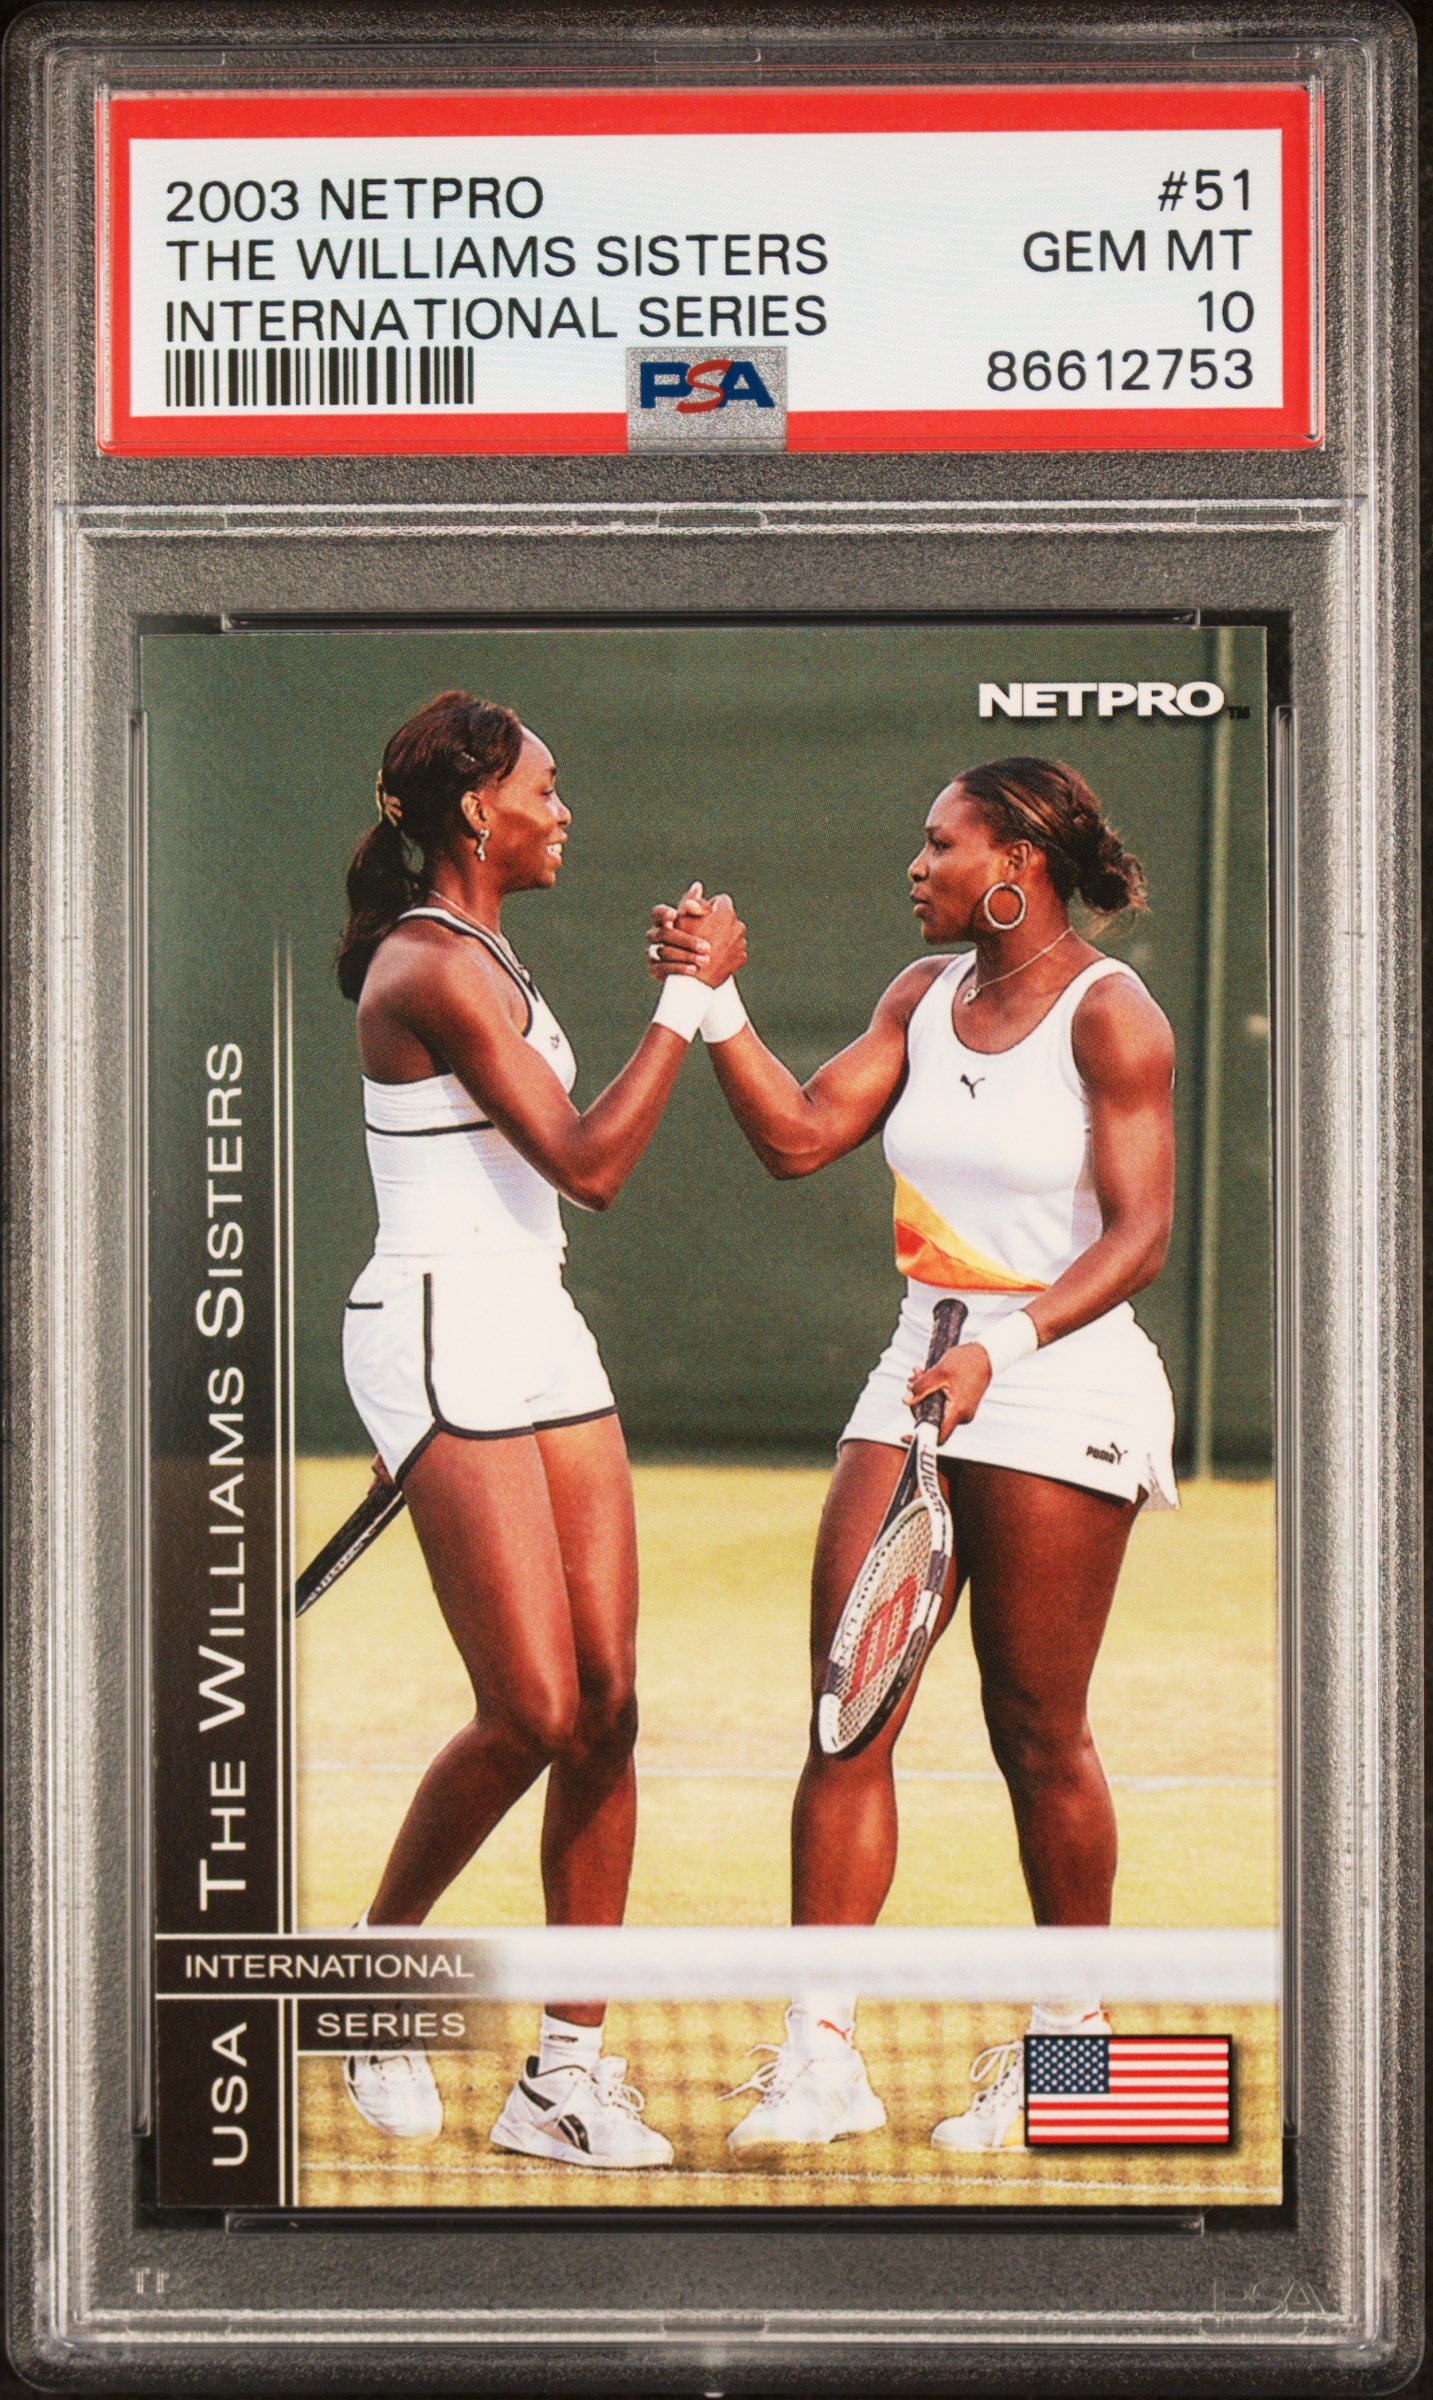 2003 NetPro International Series #51 The Williams Sisters (Serena/Venus) Rookie Card - PSA GEM MT 10